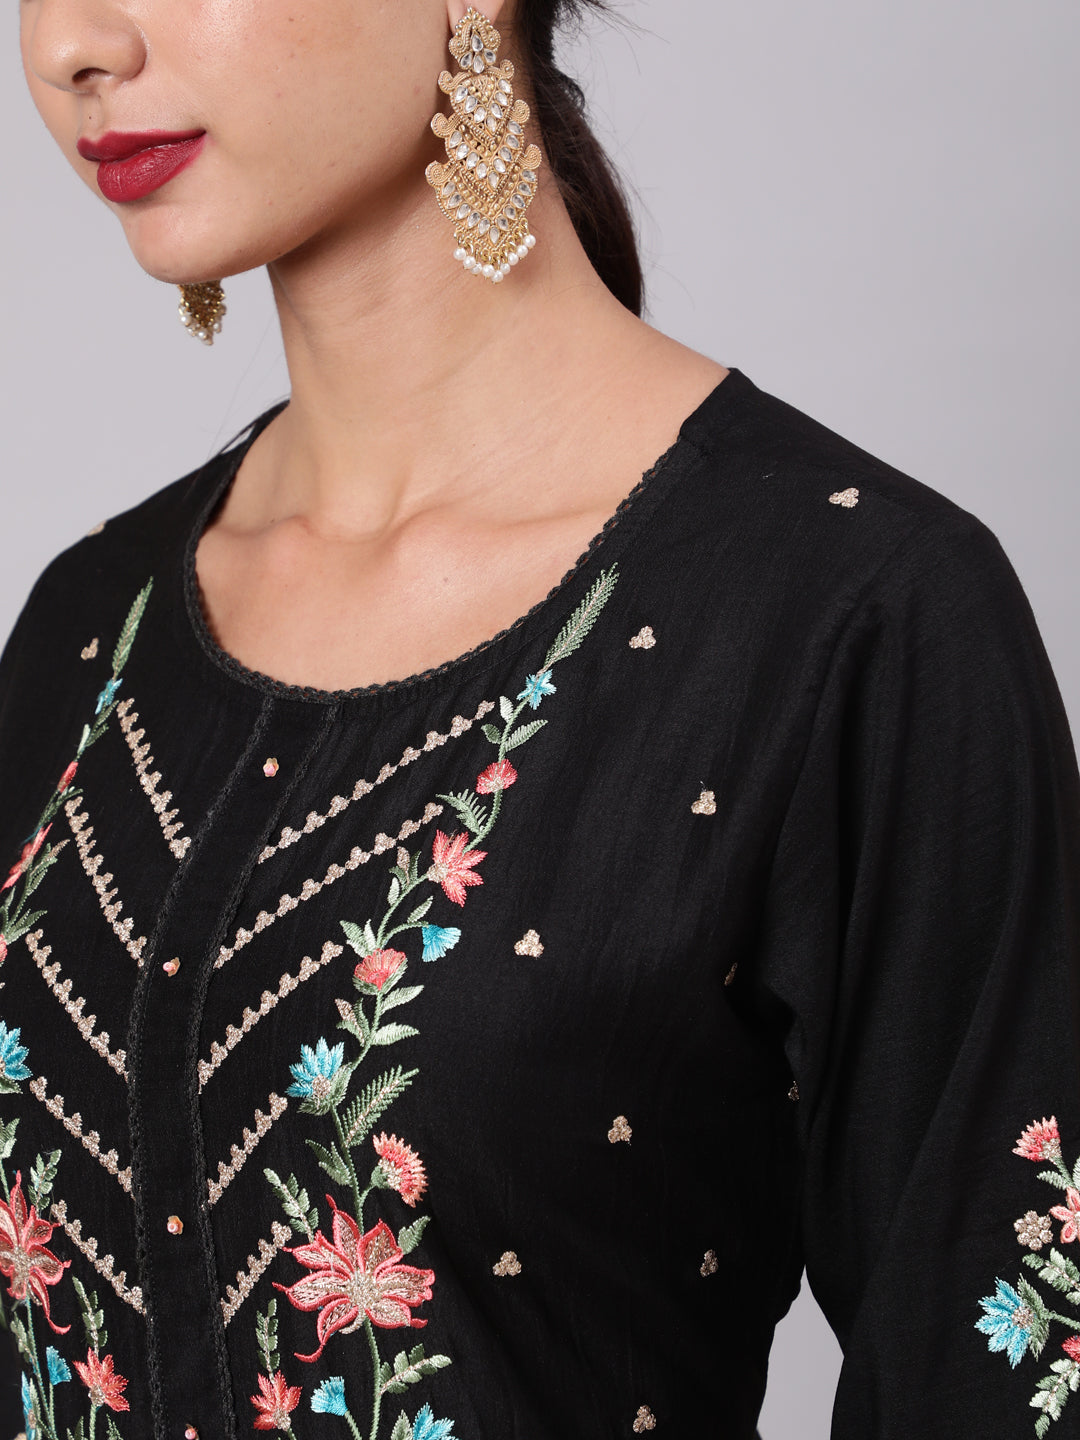 Women's Black Embroidered A-Line Kurta Pant With Dupatta - Aks